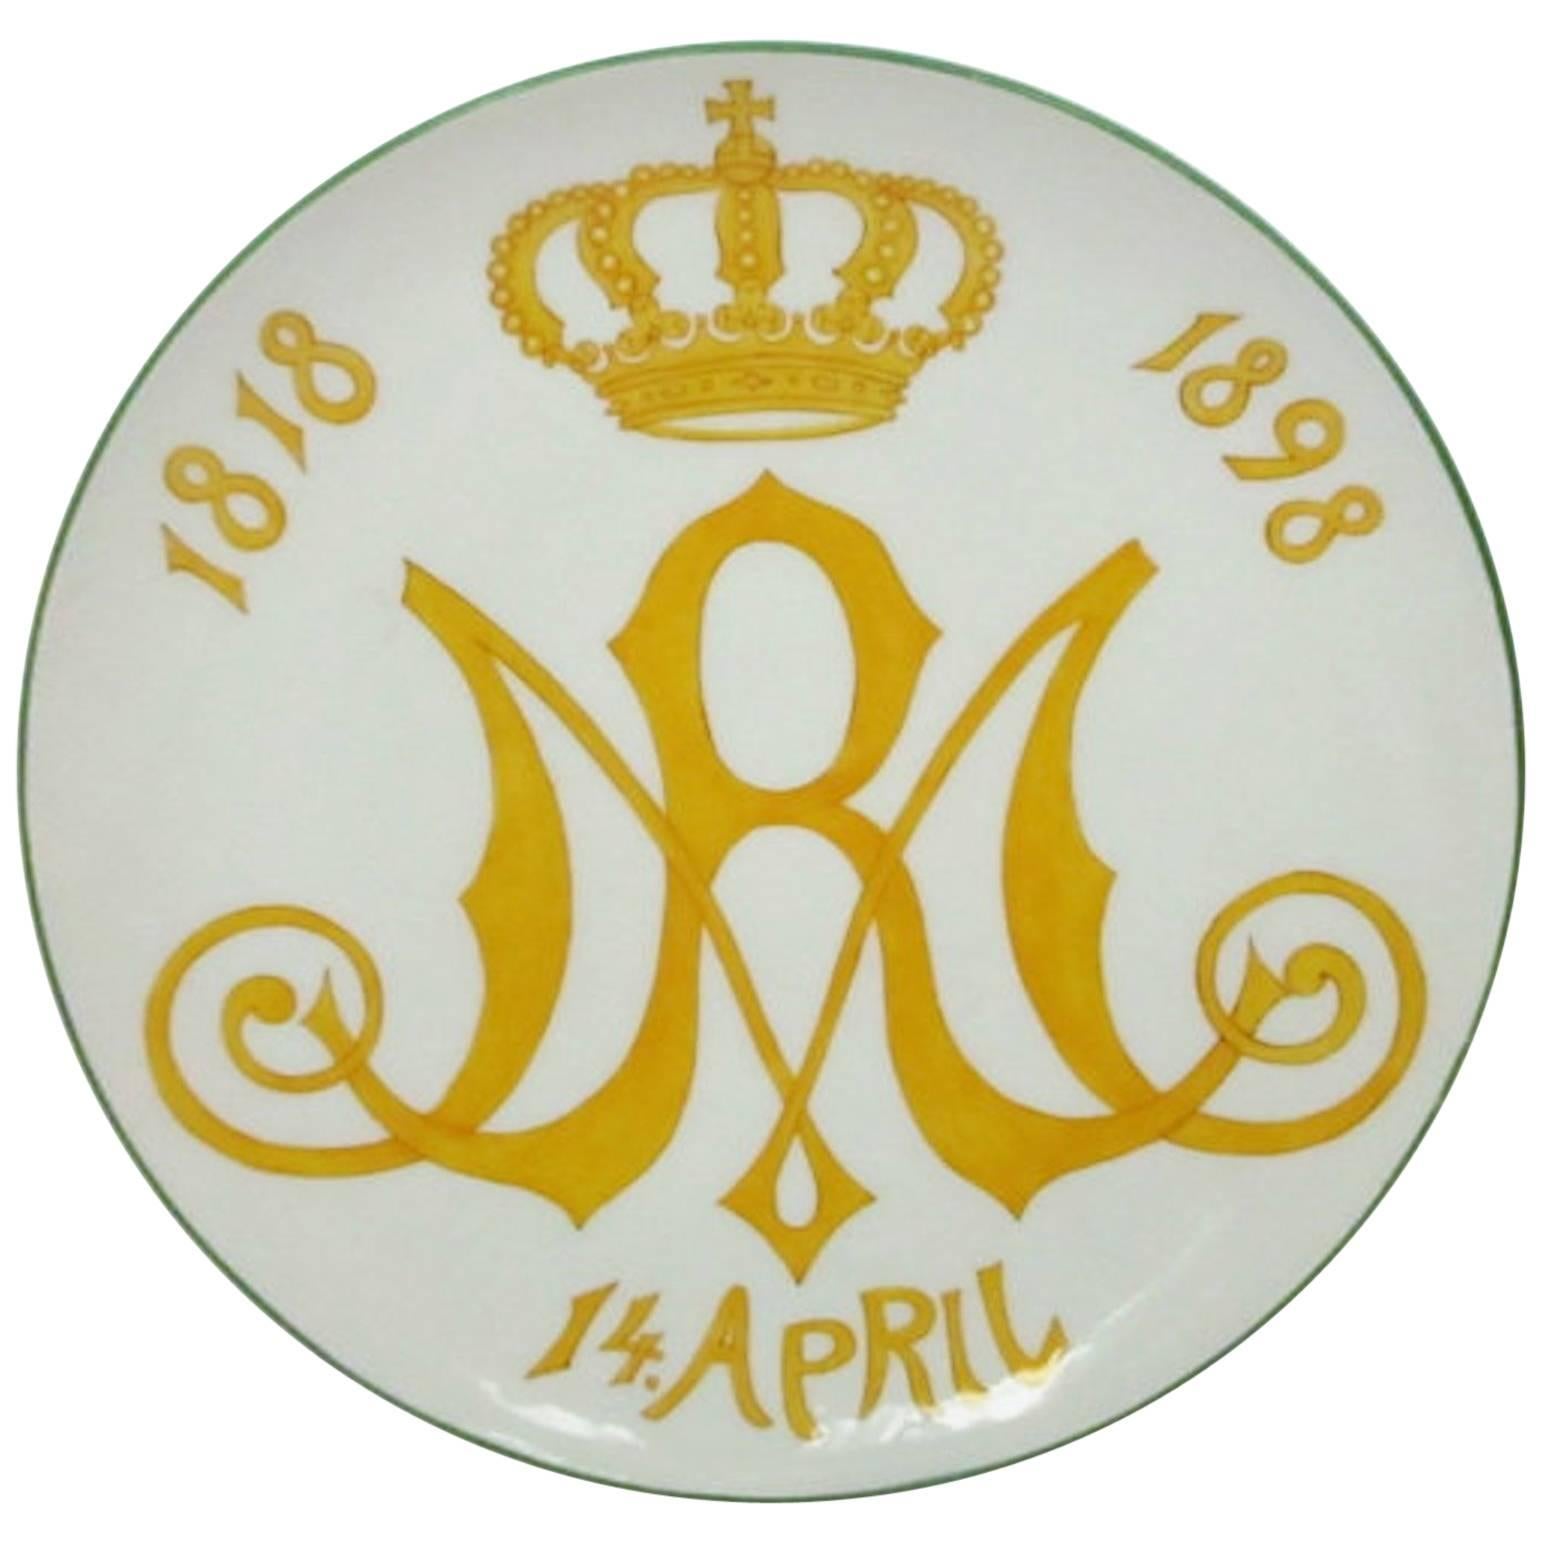 1898 Meissen Teller Porcelain Royal Jubilee Plate Marie of Saxe-Altenburg German